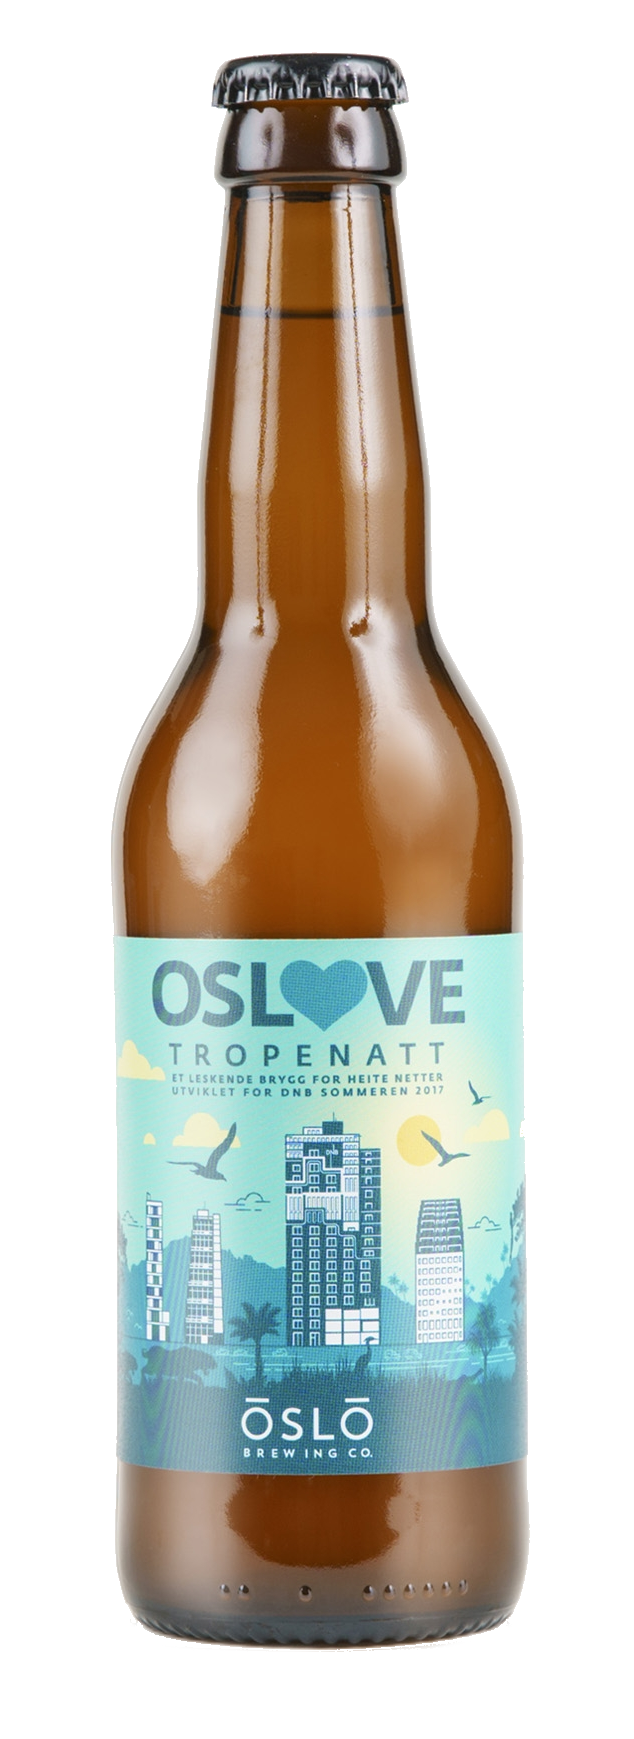 Produktbild von Oslo Brewing Company Oslove Tropenatt